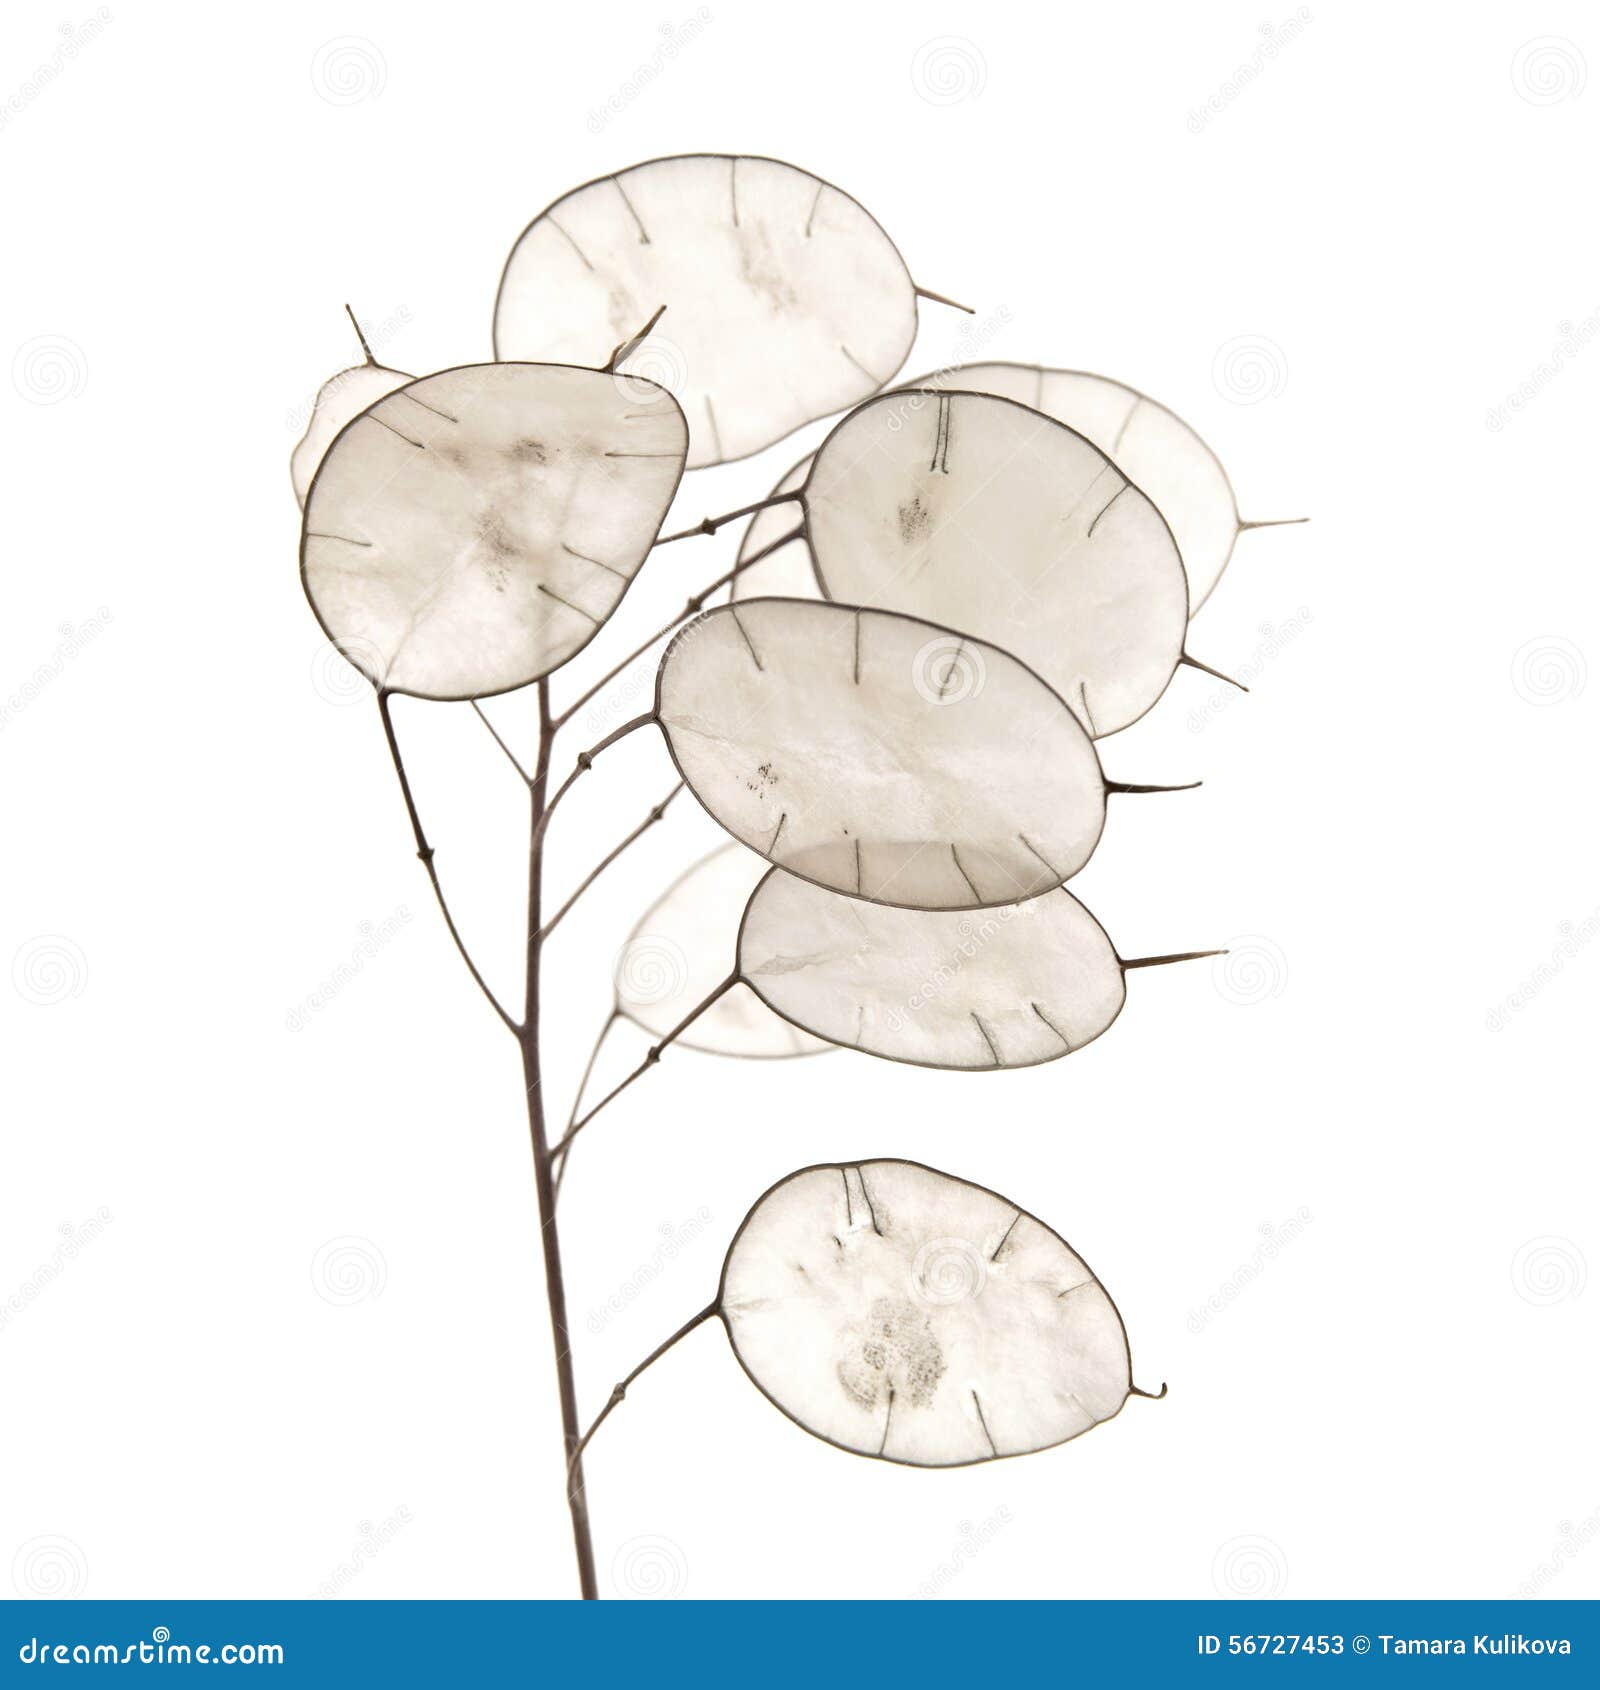 lunaria annua, silver dollar plant